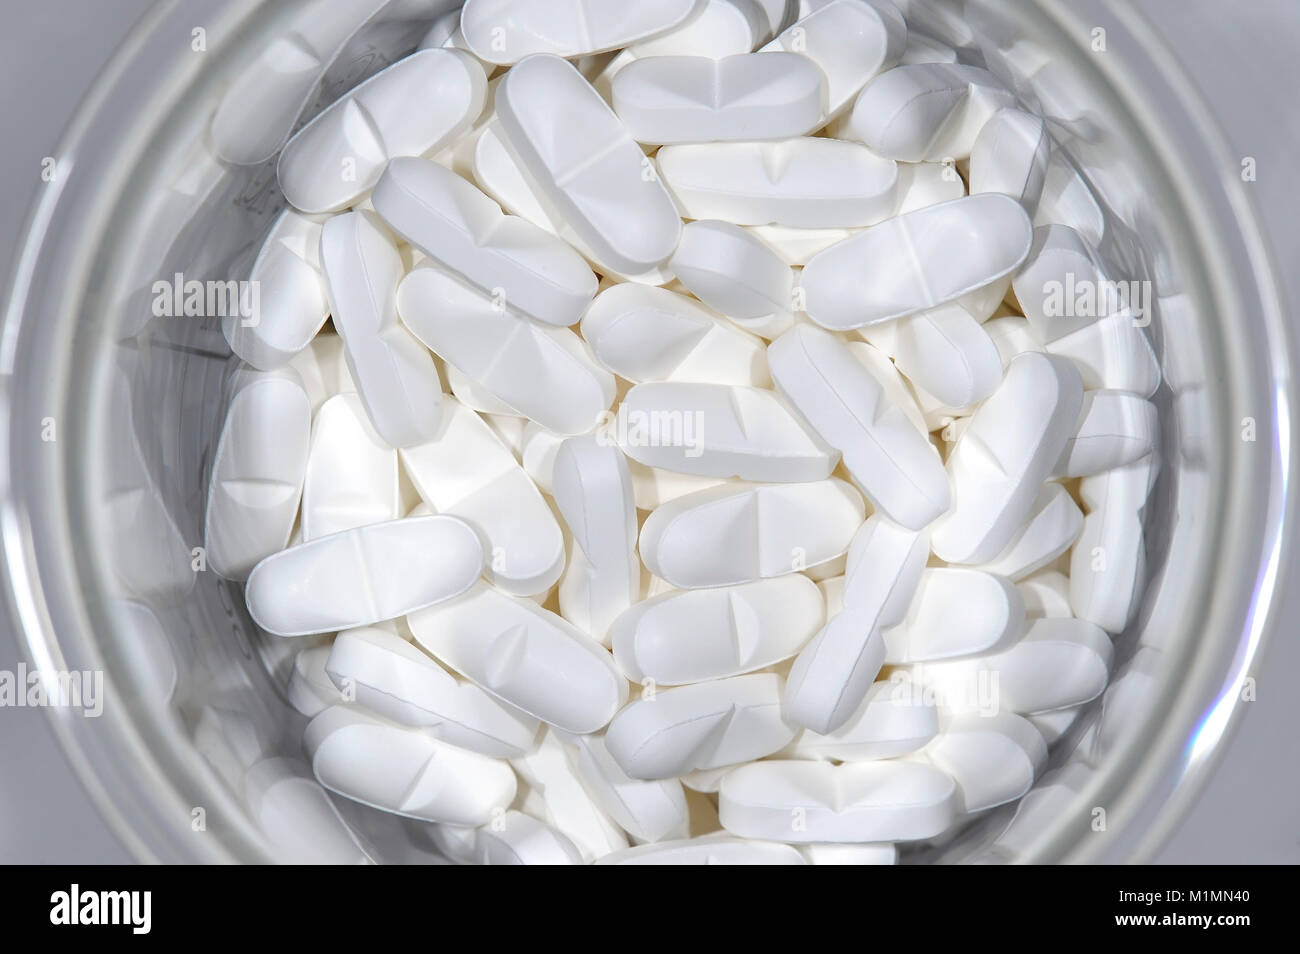 Pills, tablets, capsules, Pillen, Tabletten, Kapseln Stock Photo